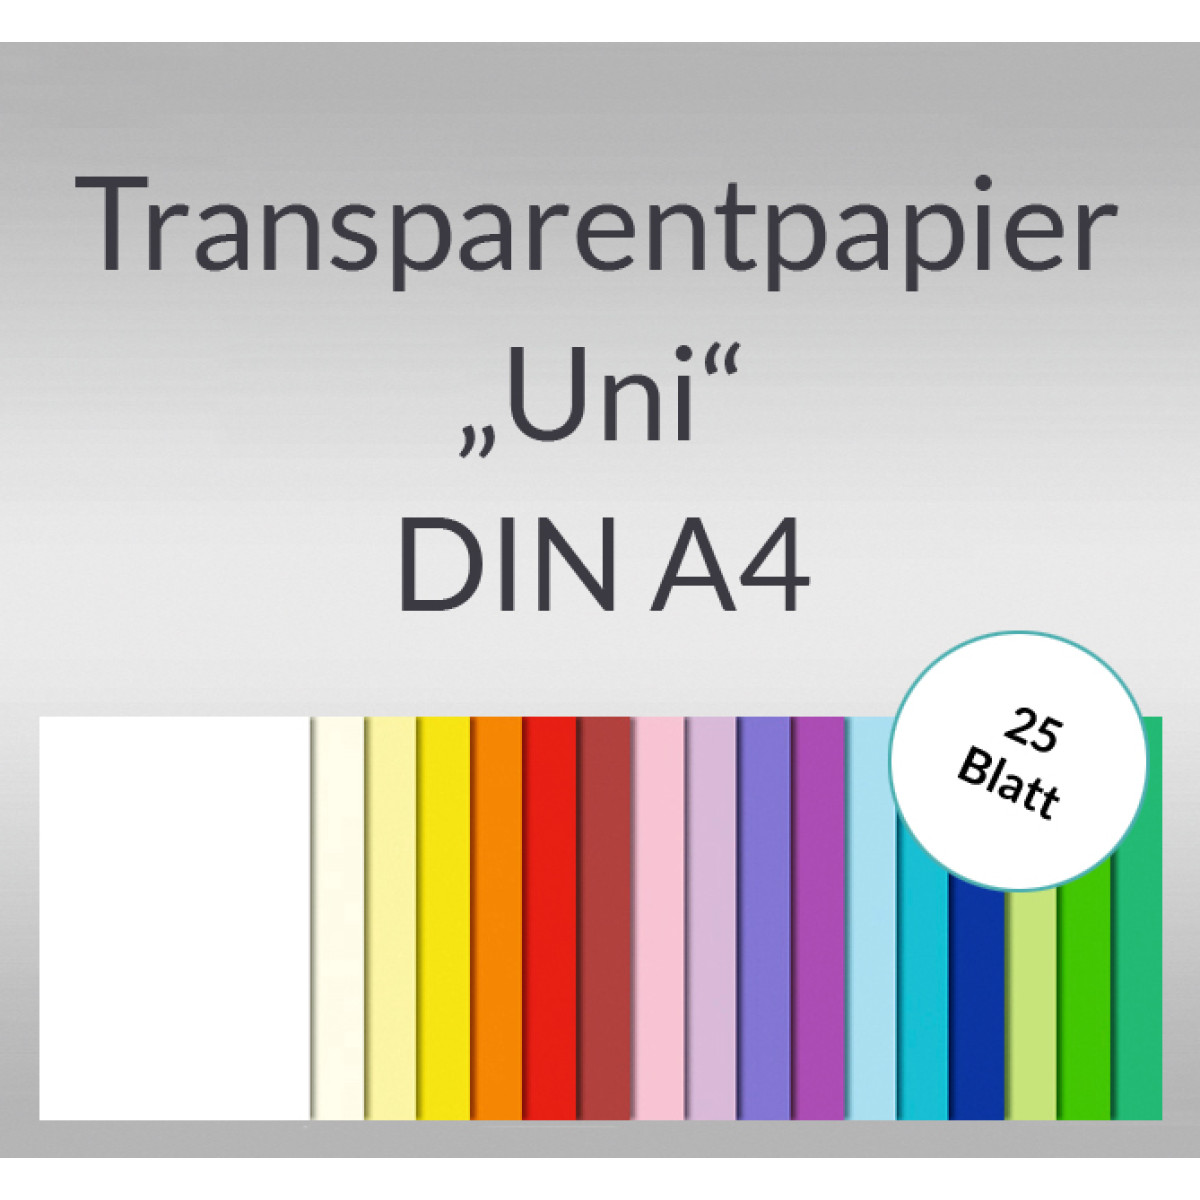 Transparentpapier "Uni" DIN A4 - 25 Blatt